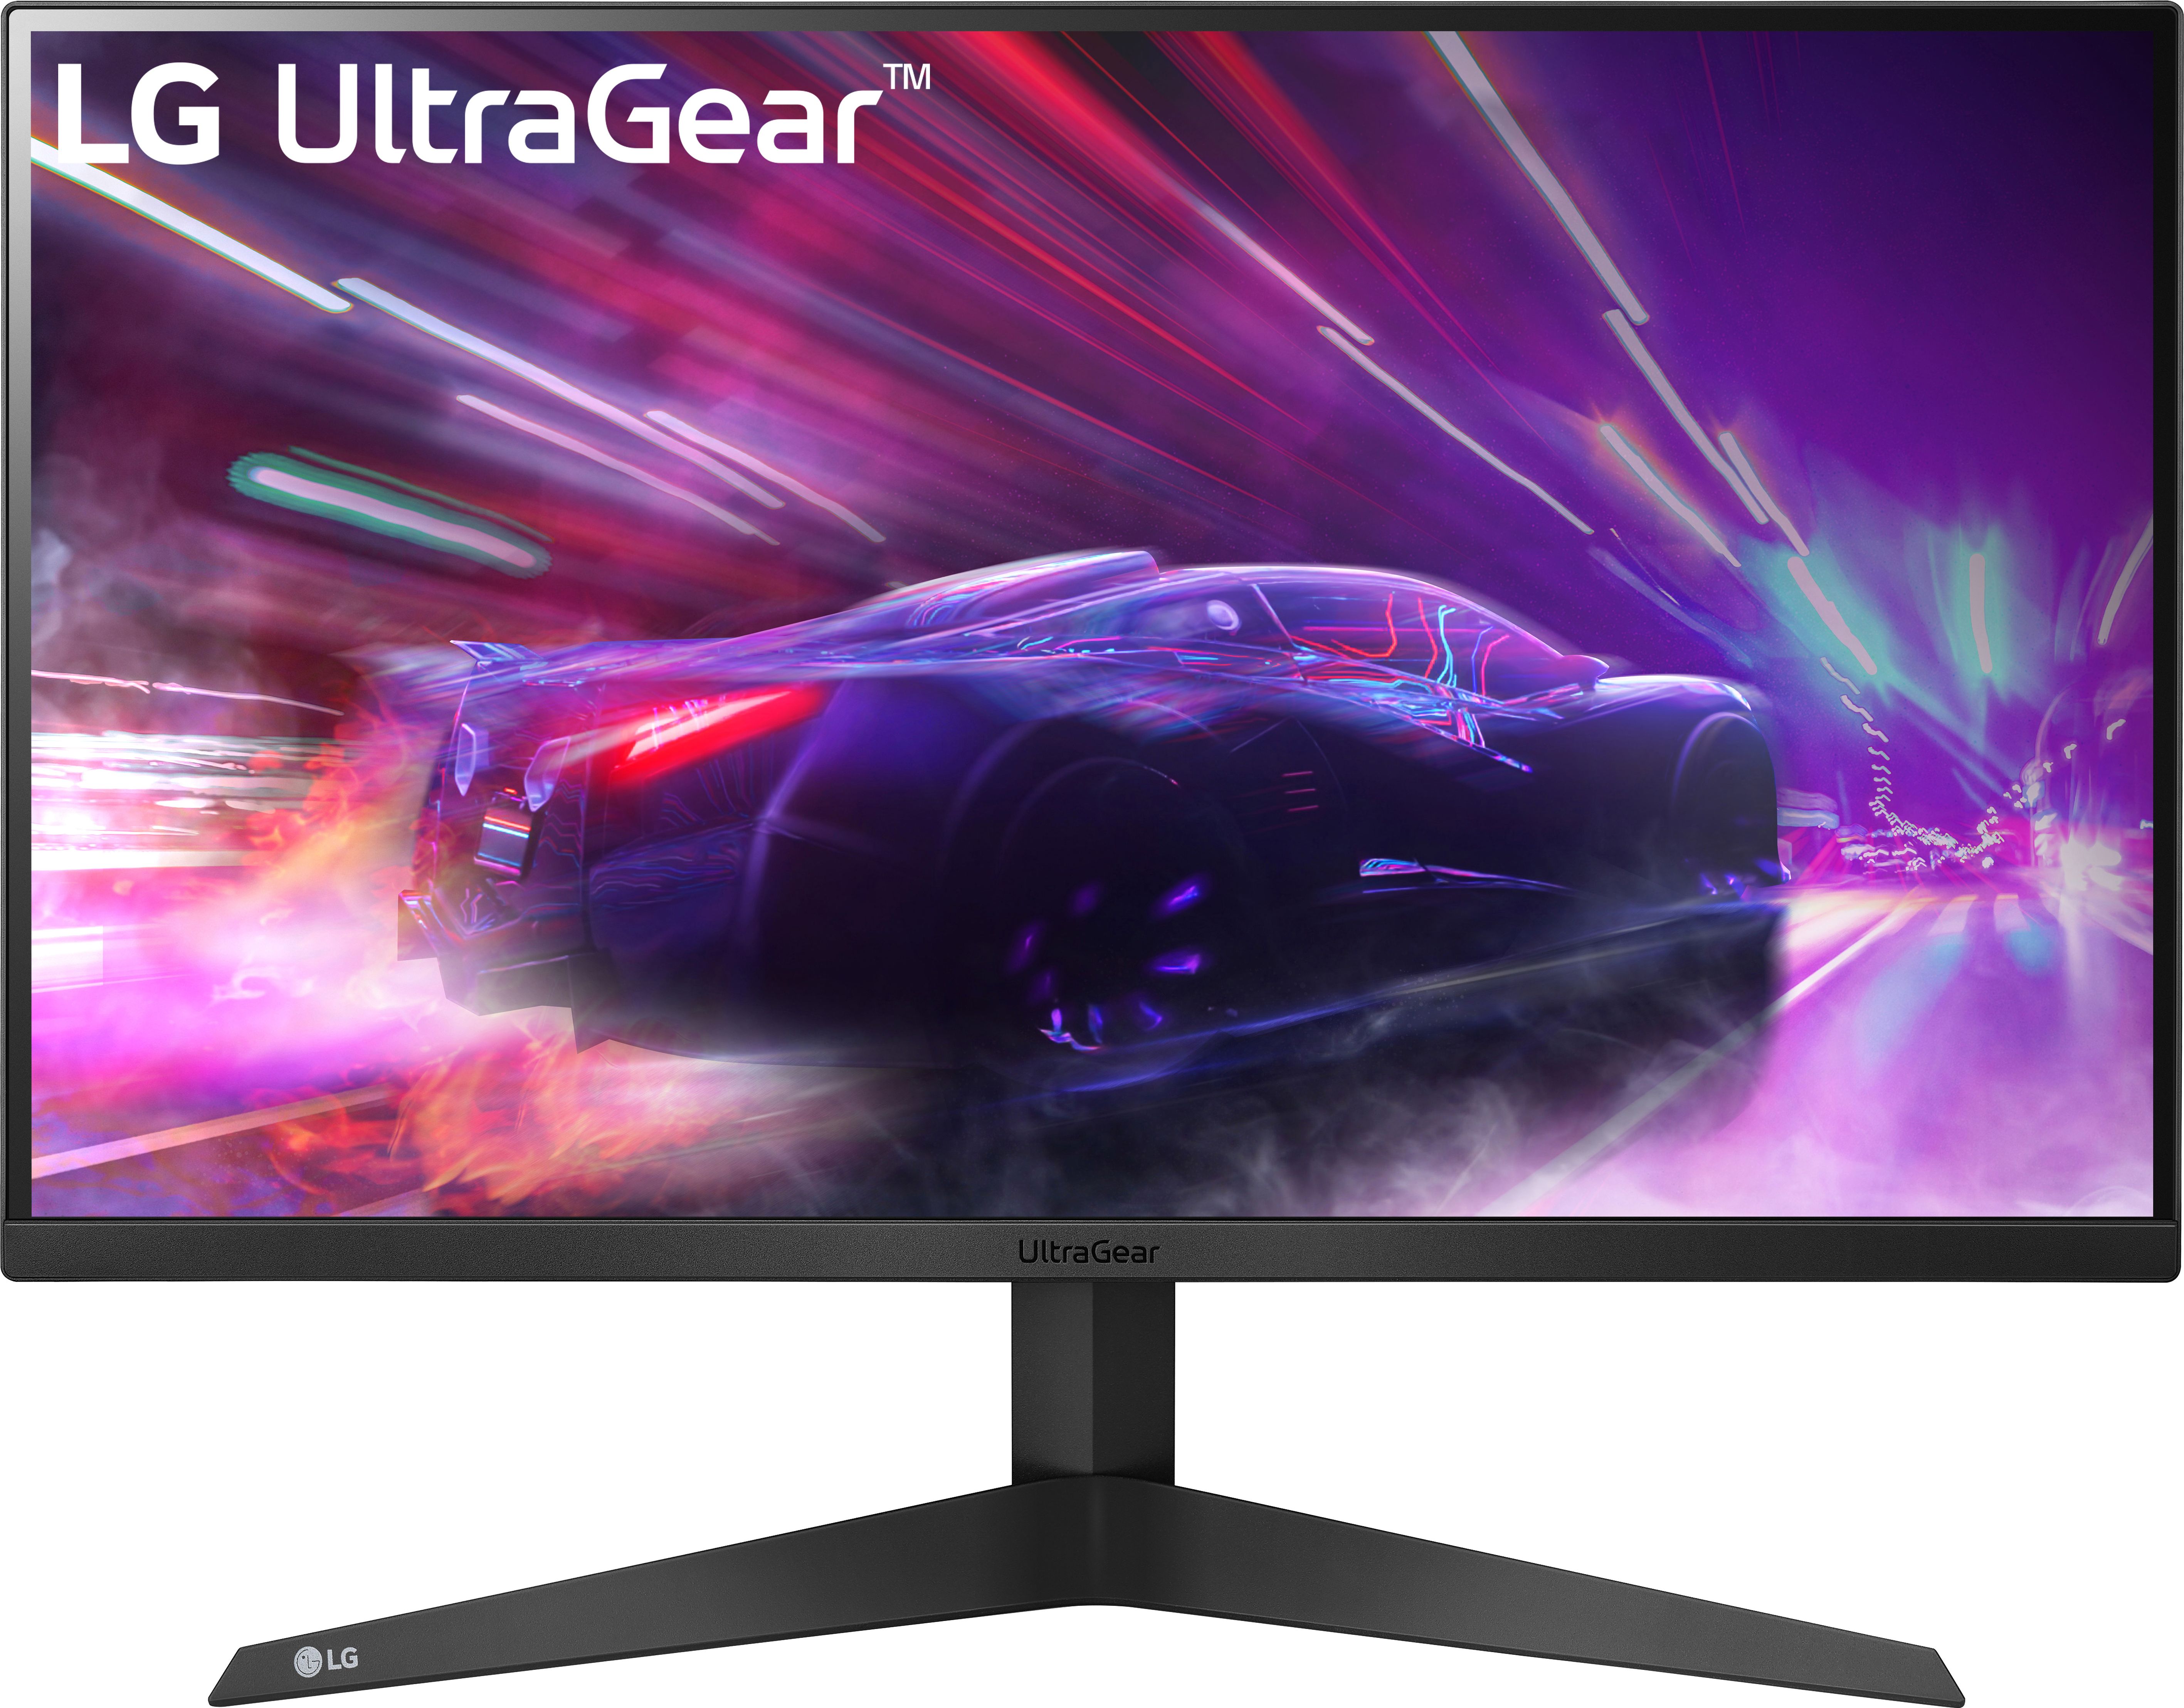 LG 27” UltraGear™ Monitor | Black | 27GQ50F | ao.com